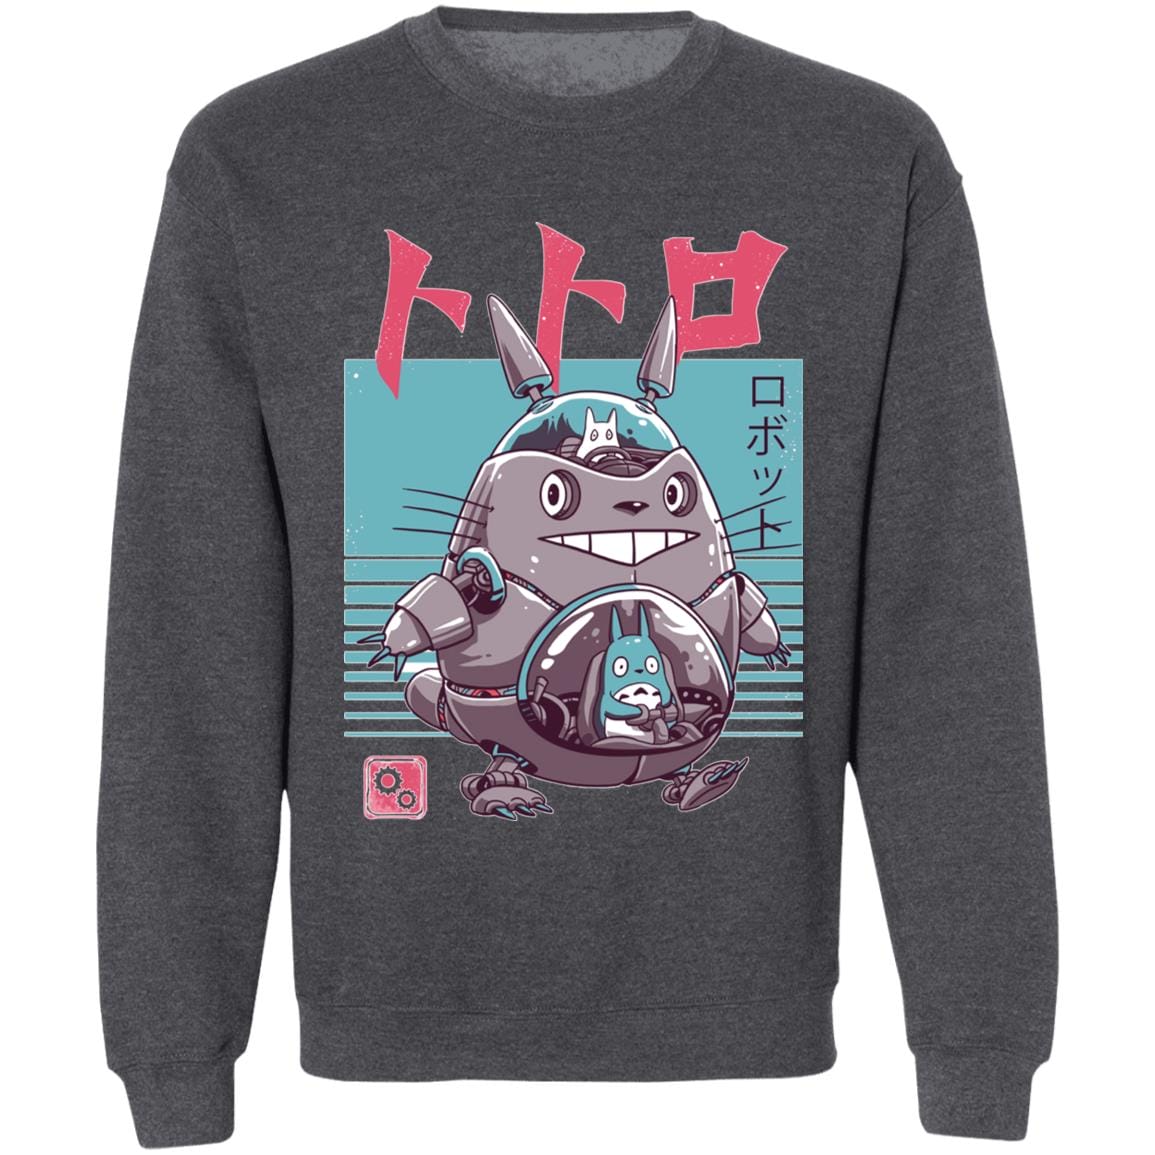 Totoro Bot Sweatshirt